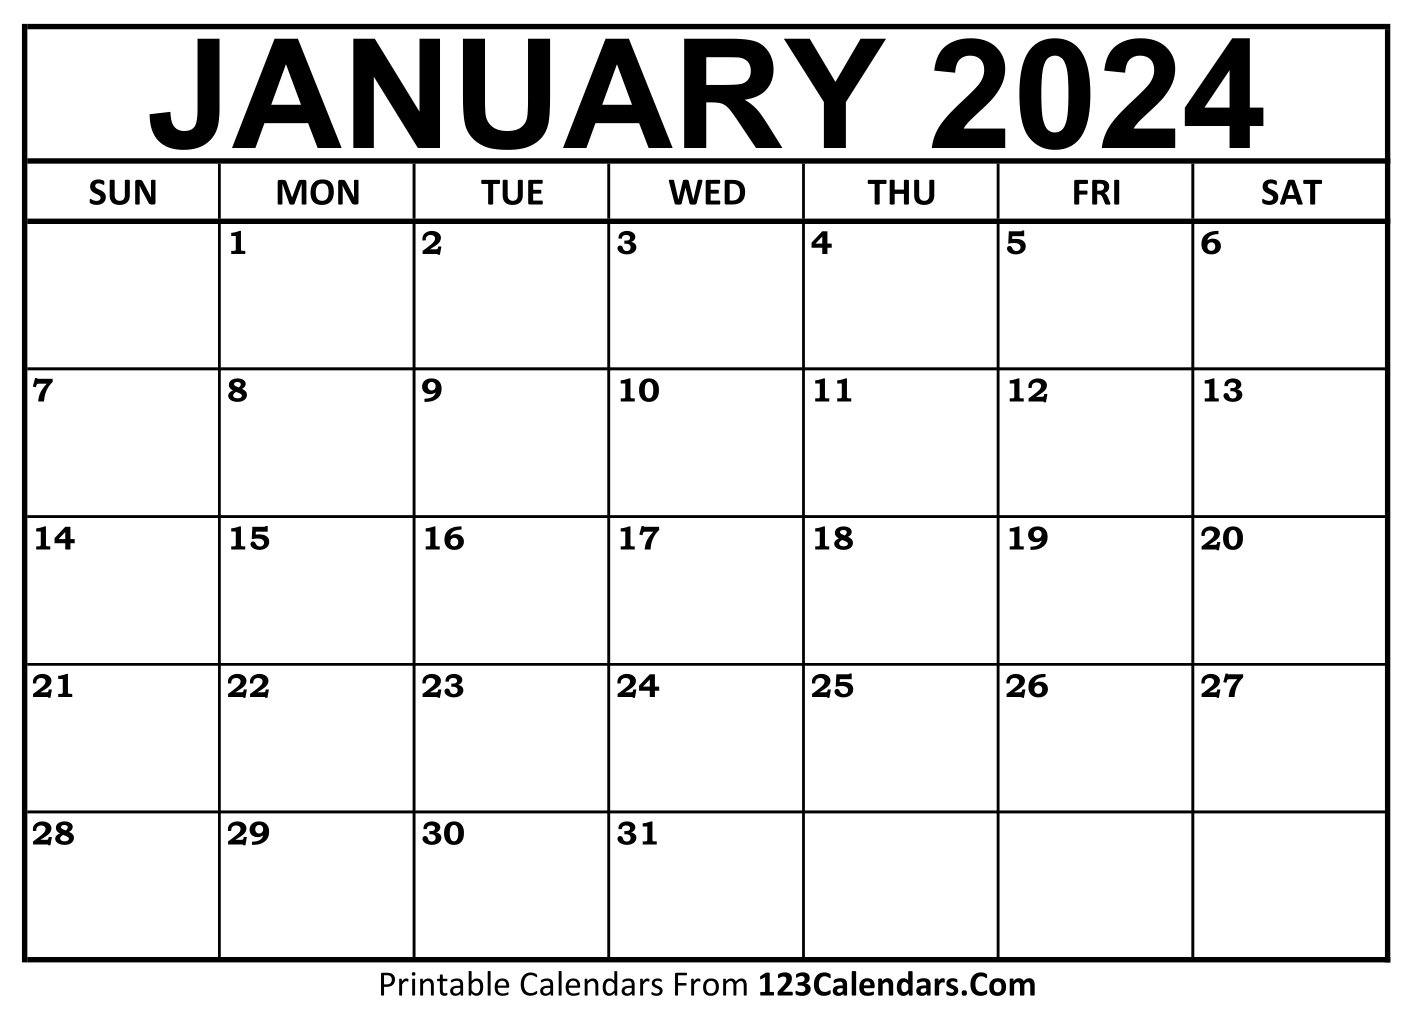 Printable January 2024 Calendar Templates - 123Calendars | Free Printable Calendar 2024